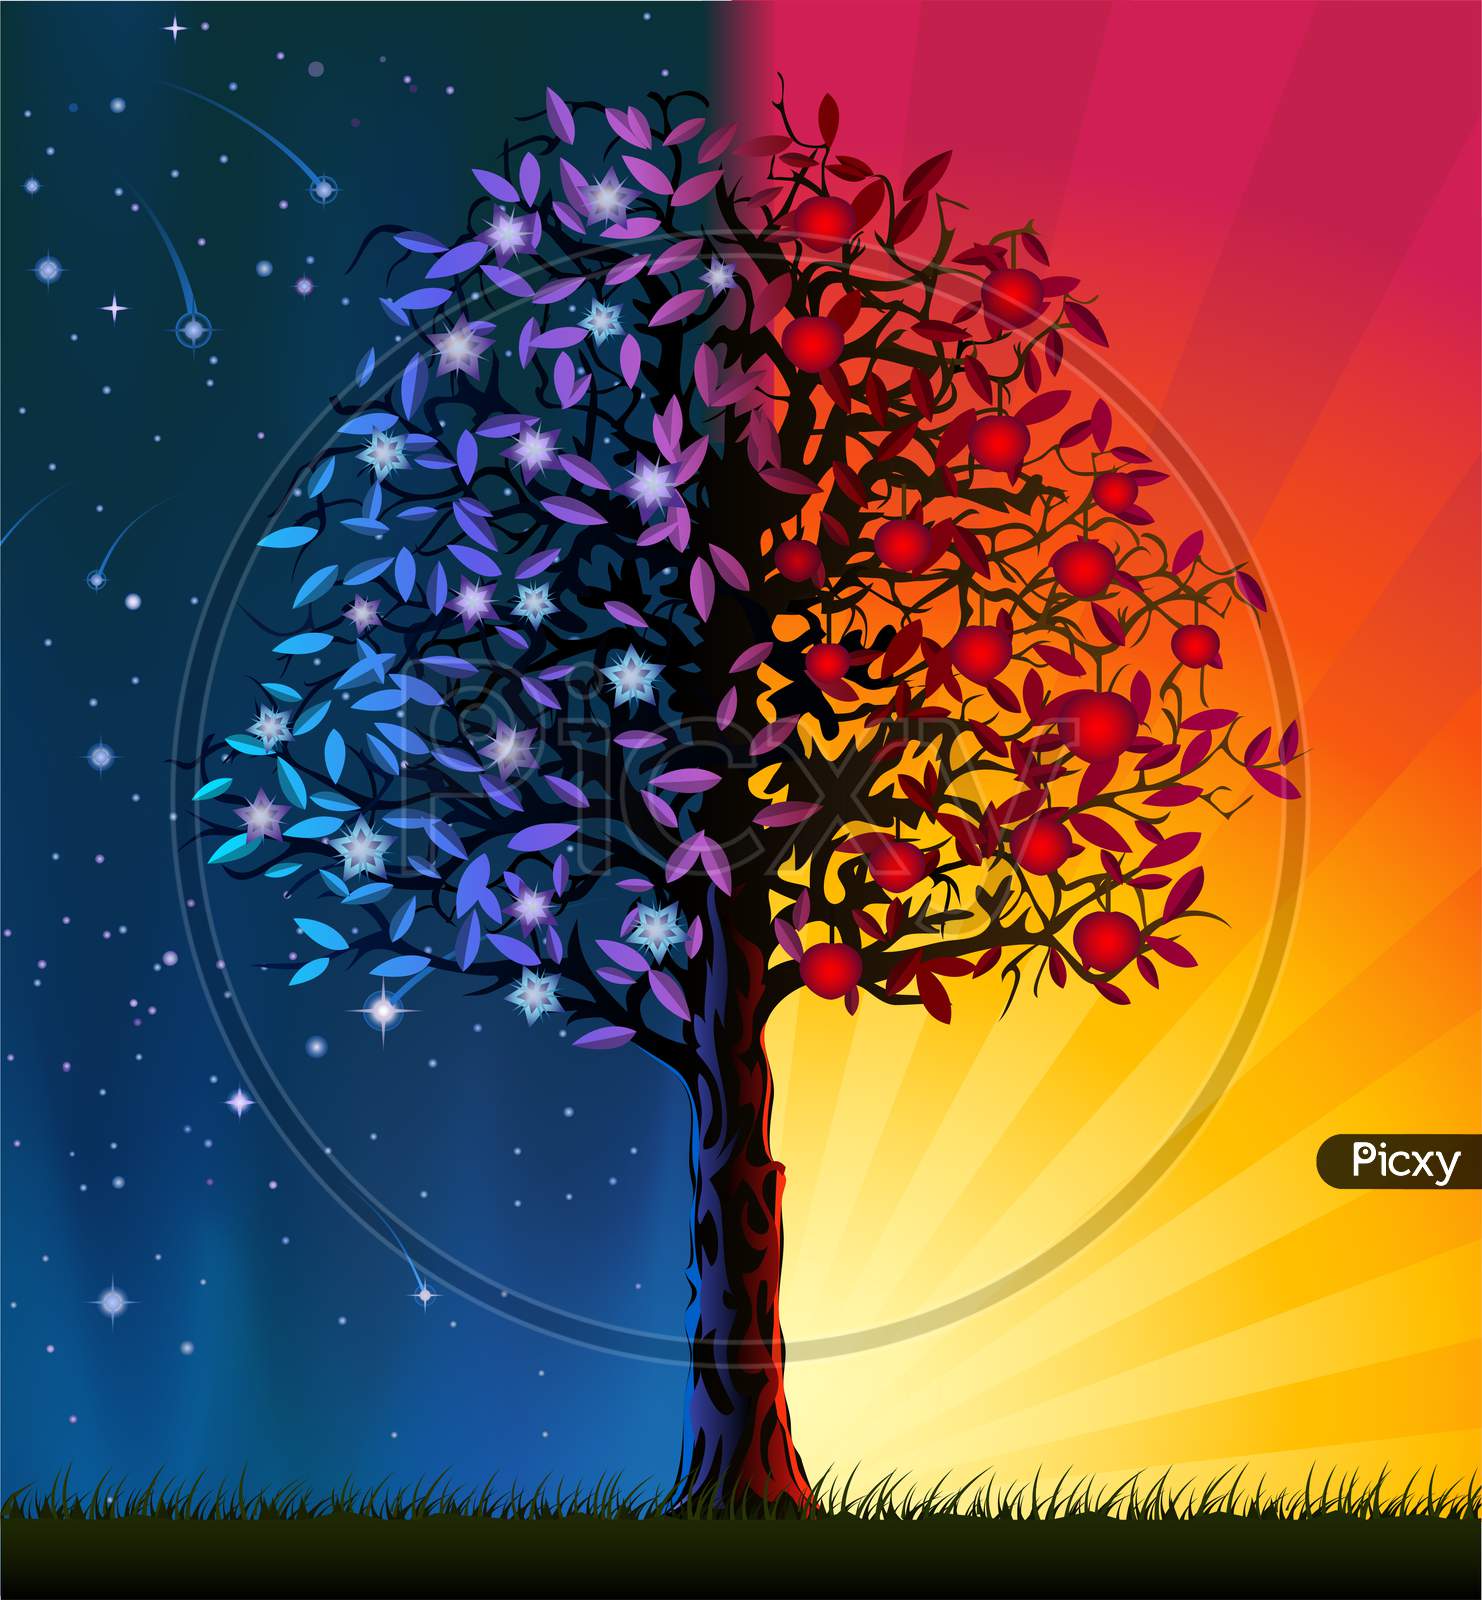 Wonderful Fruite Tree With Multicolor Art On background Illustartion Wallpaper Design